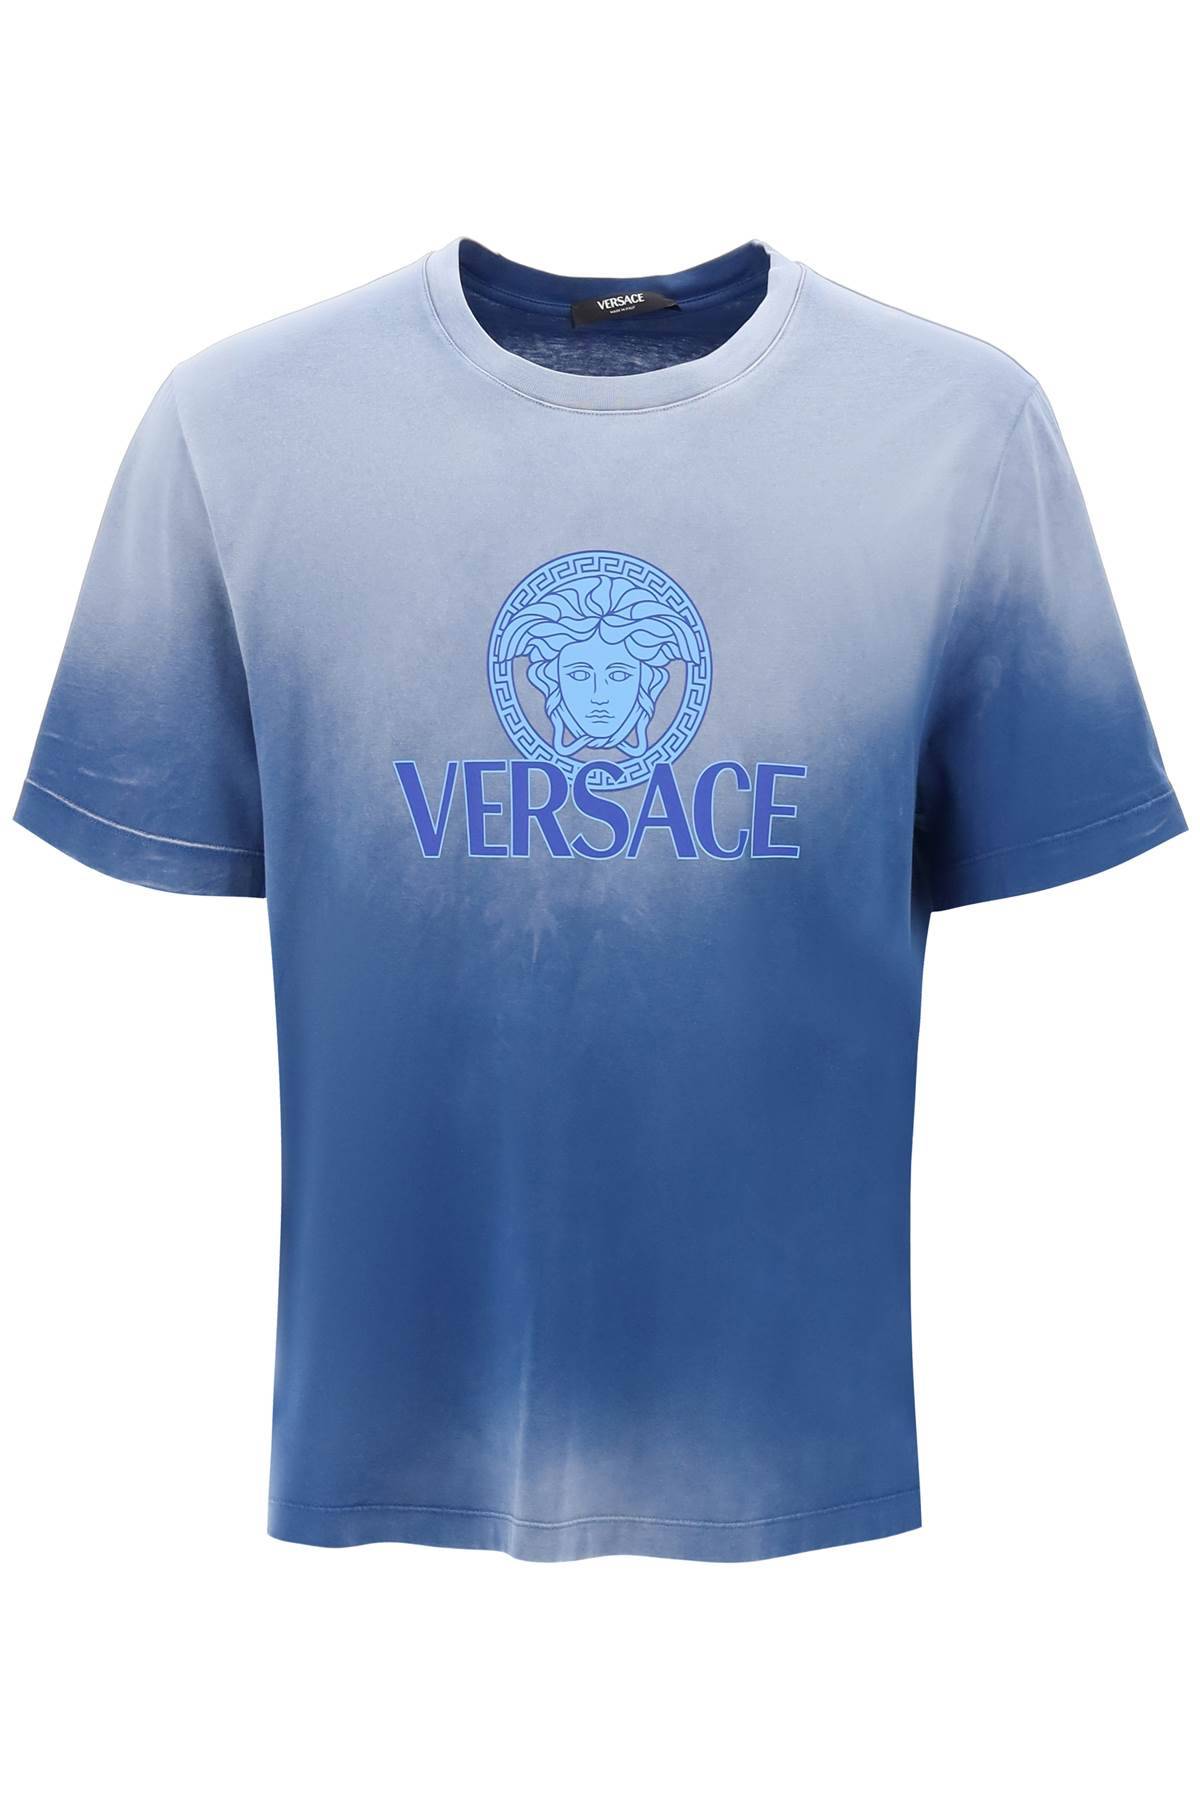 Versace VERSACE "gradient medusa t-shirt